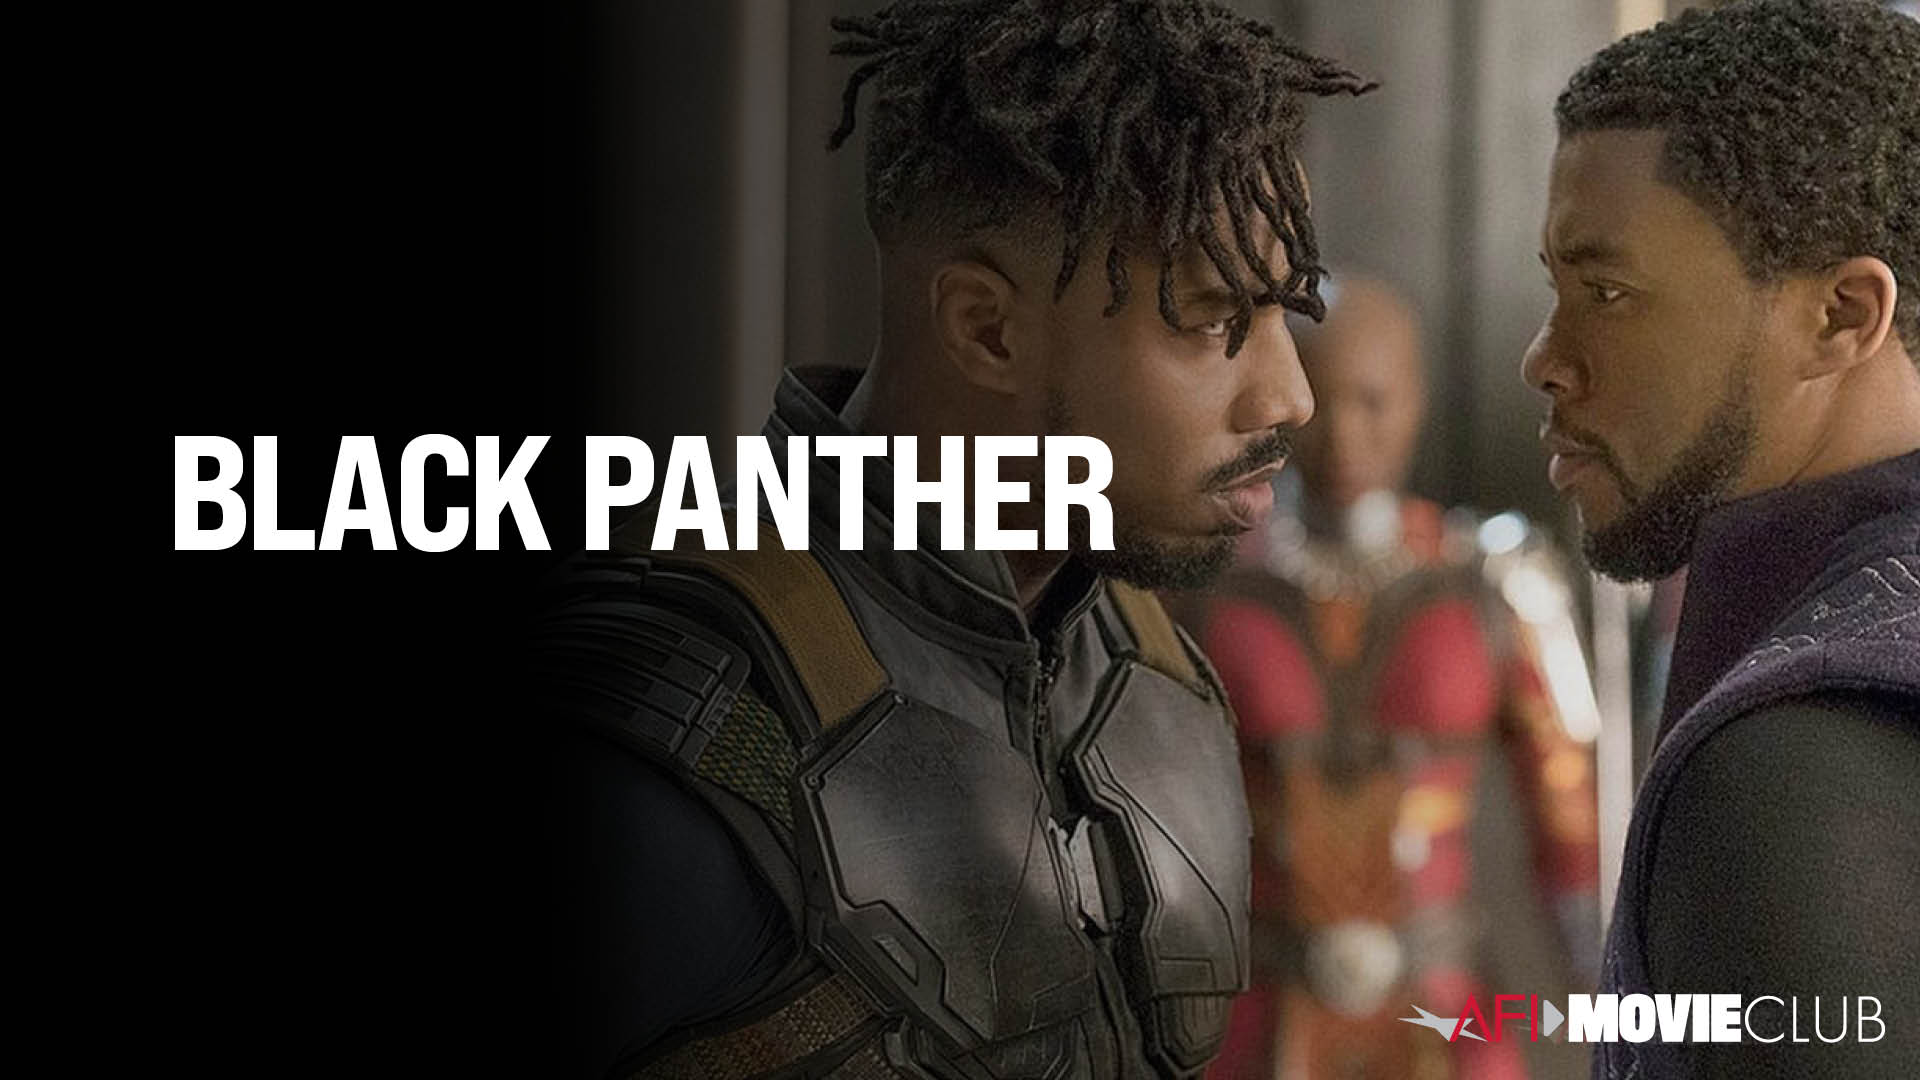 Black Panther Film Still - Michael B. Jordan and Chadwick Boseman